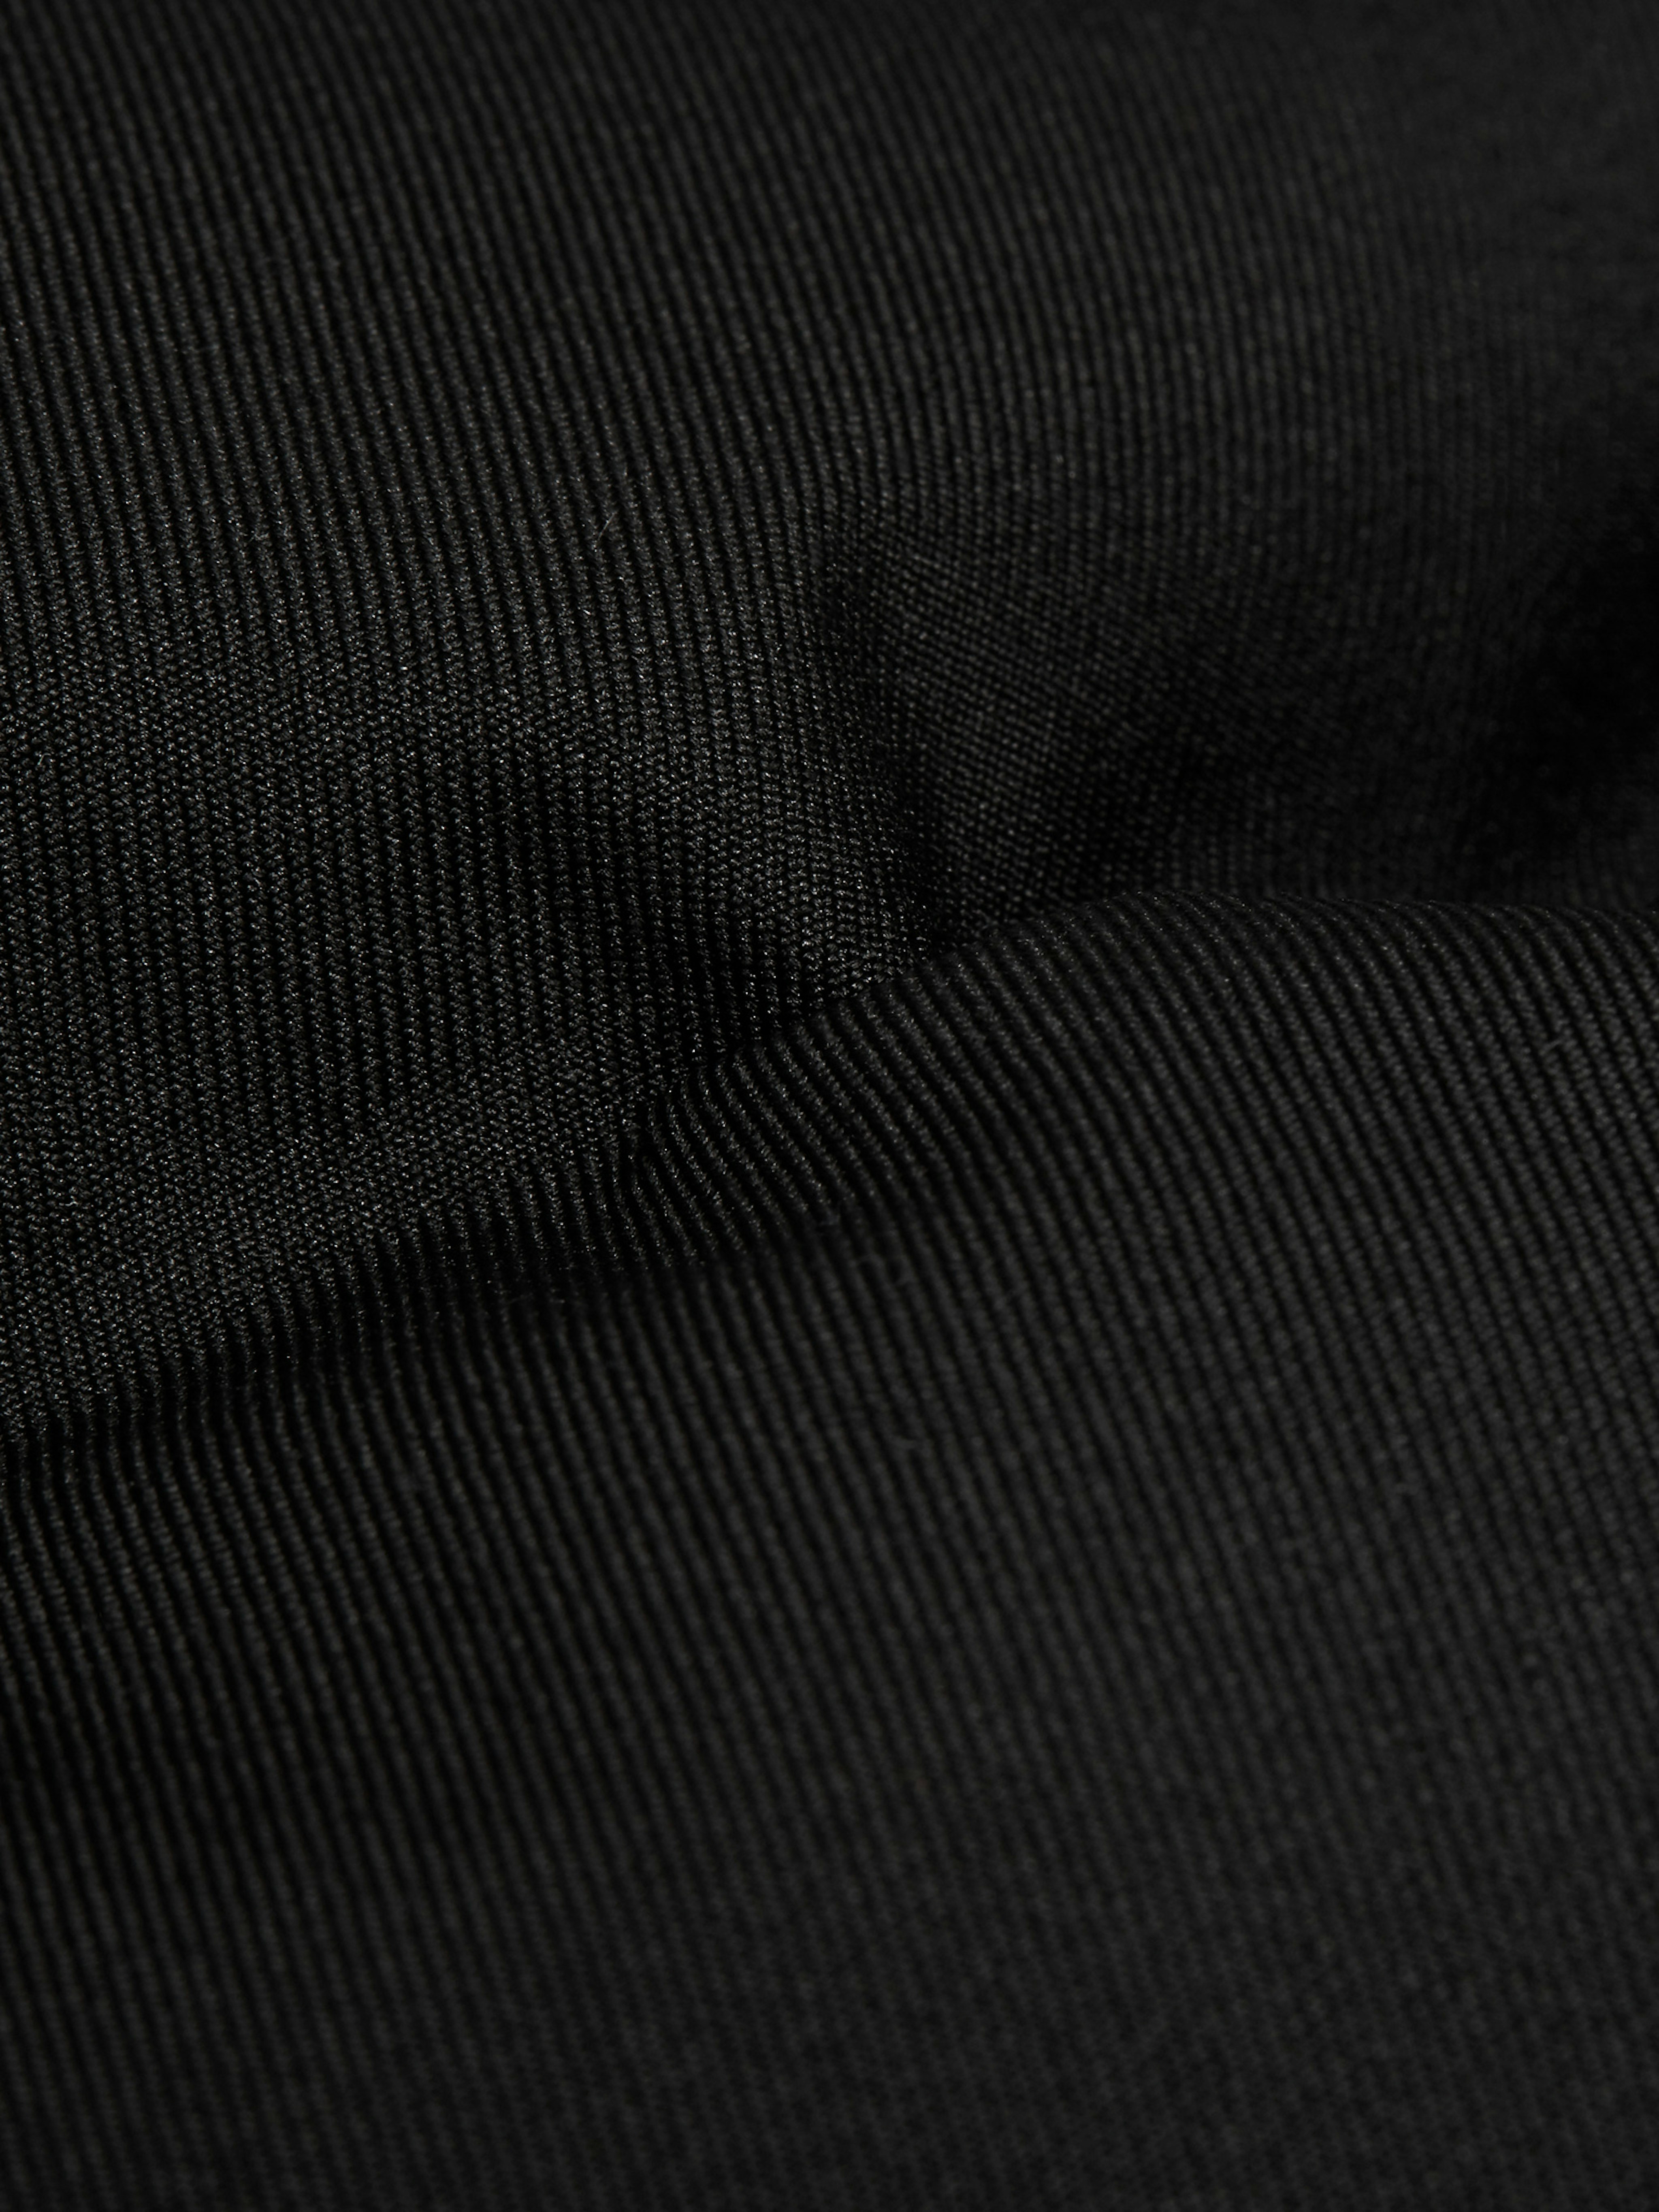 Black fabric 